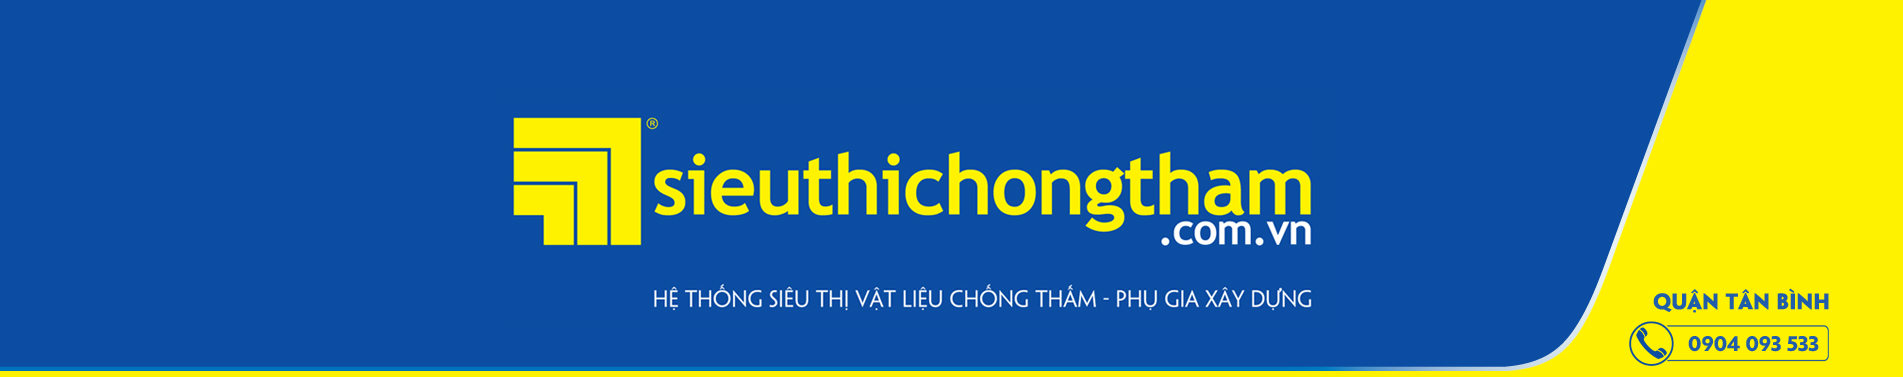 Quan Tan Binh Banner 2